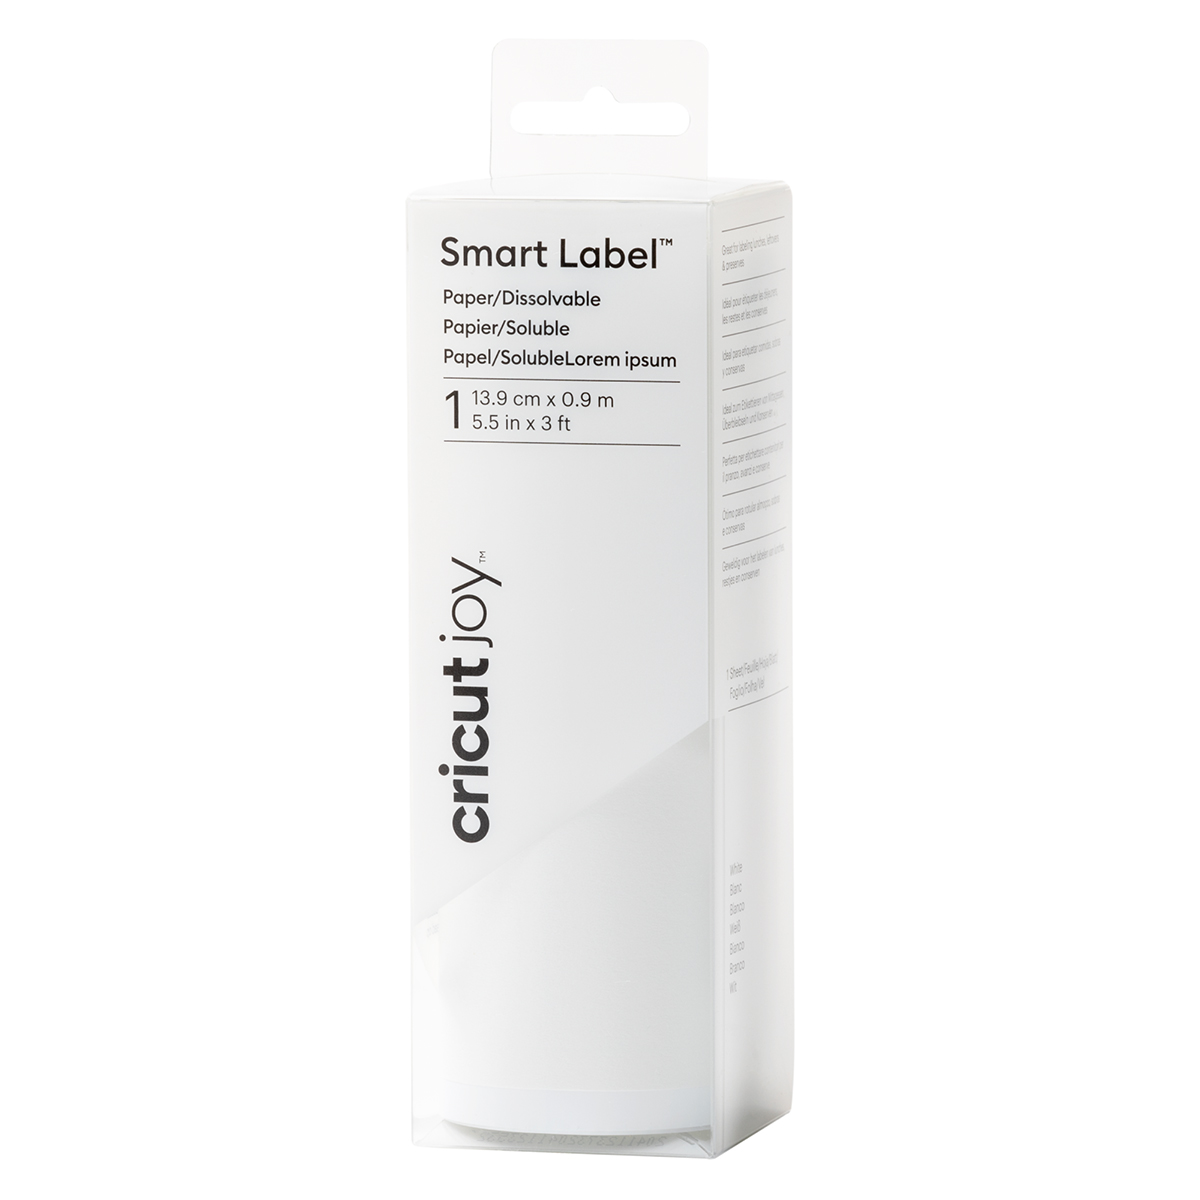 Plotterie.nl – Cricut Smart Label 2010061-1